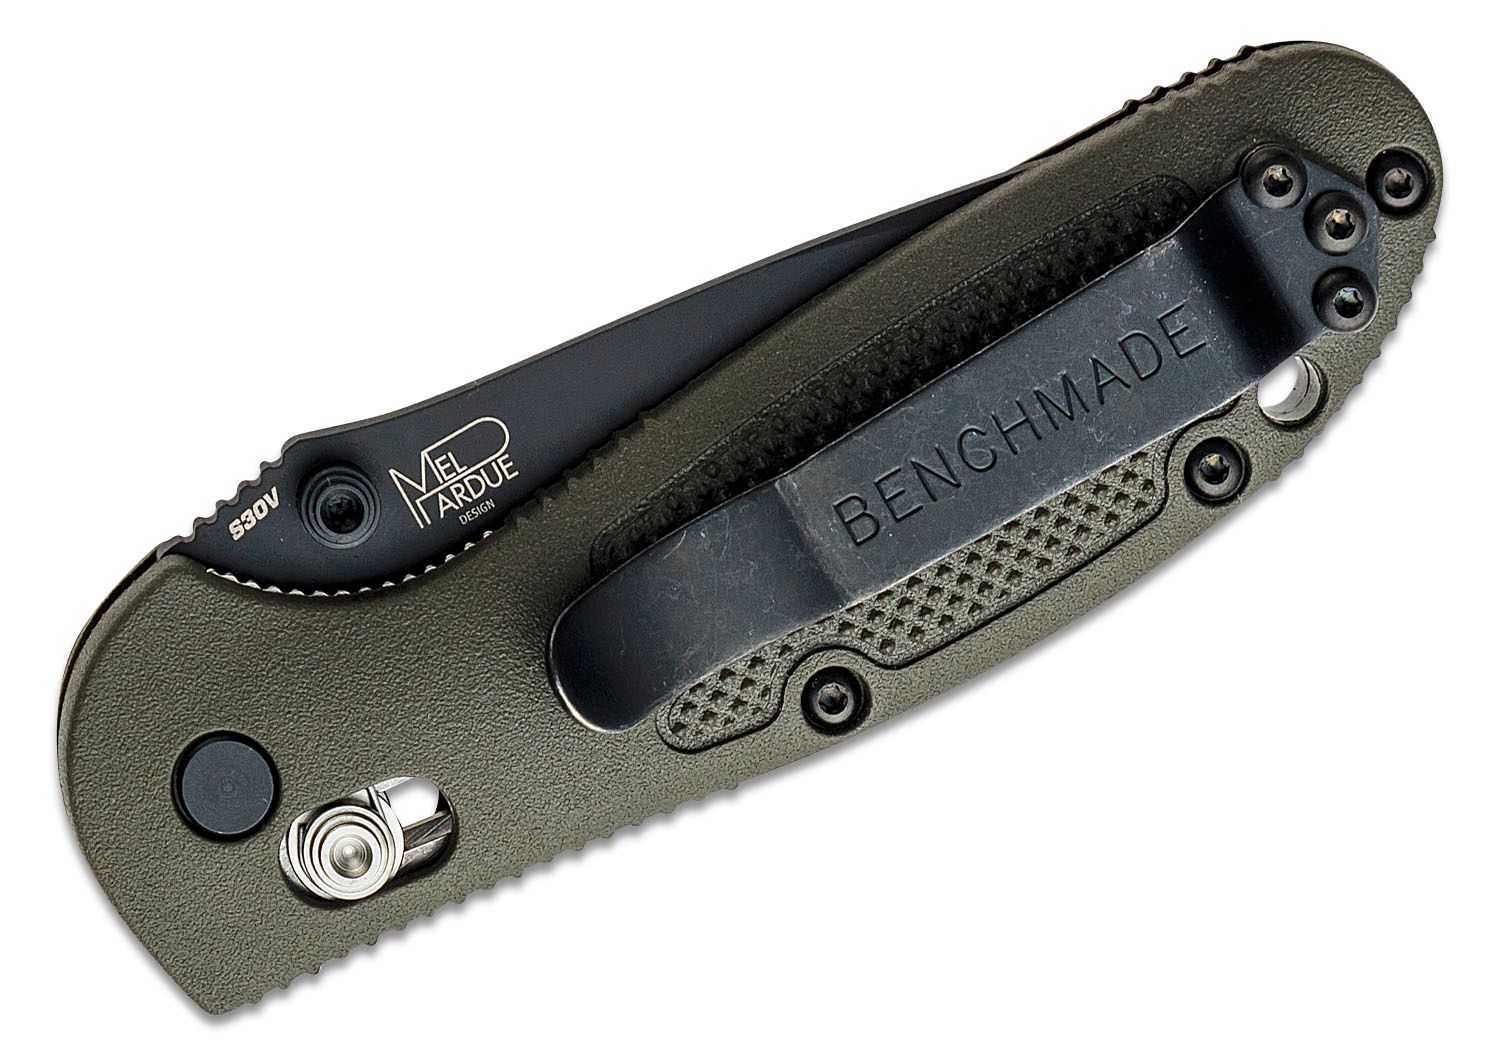  Benchmade - Griptilian 556-S30V EDC Knife with Black Handle  (556-S30V) : Sports & Outdoors